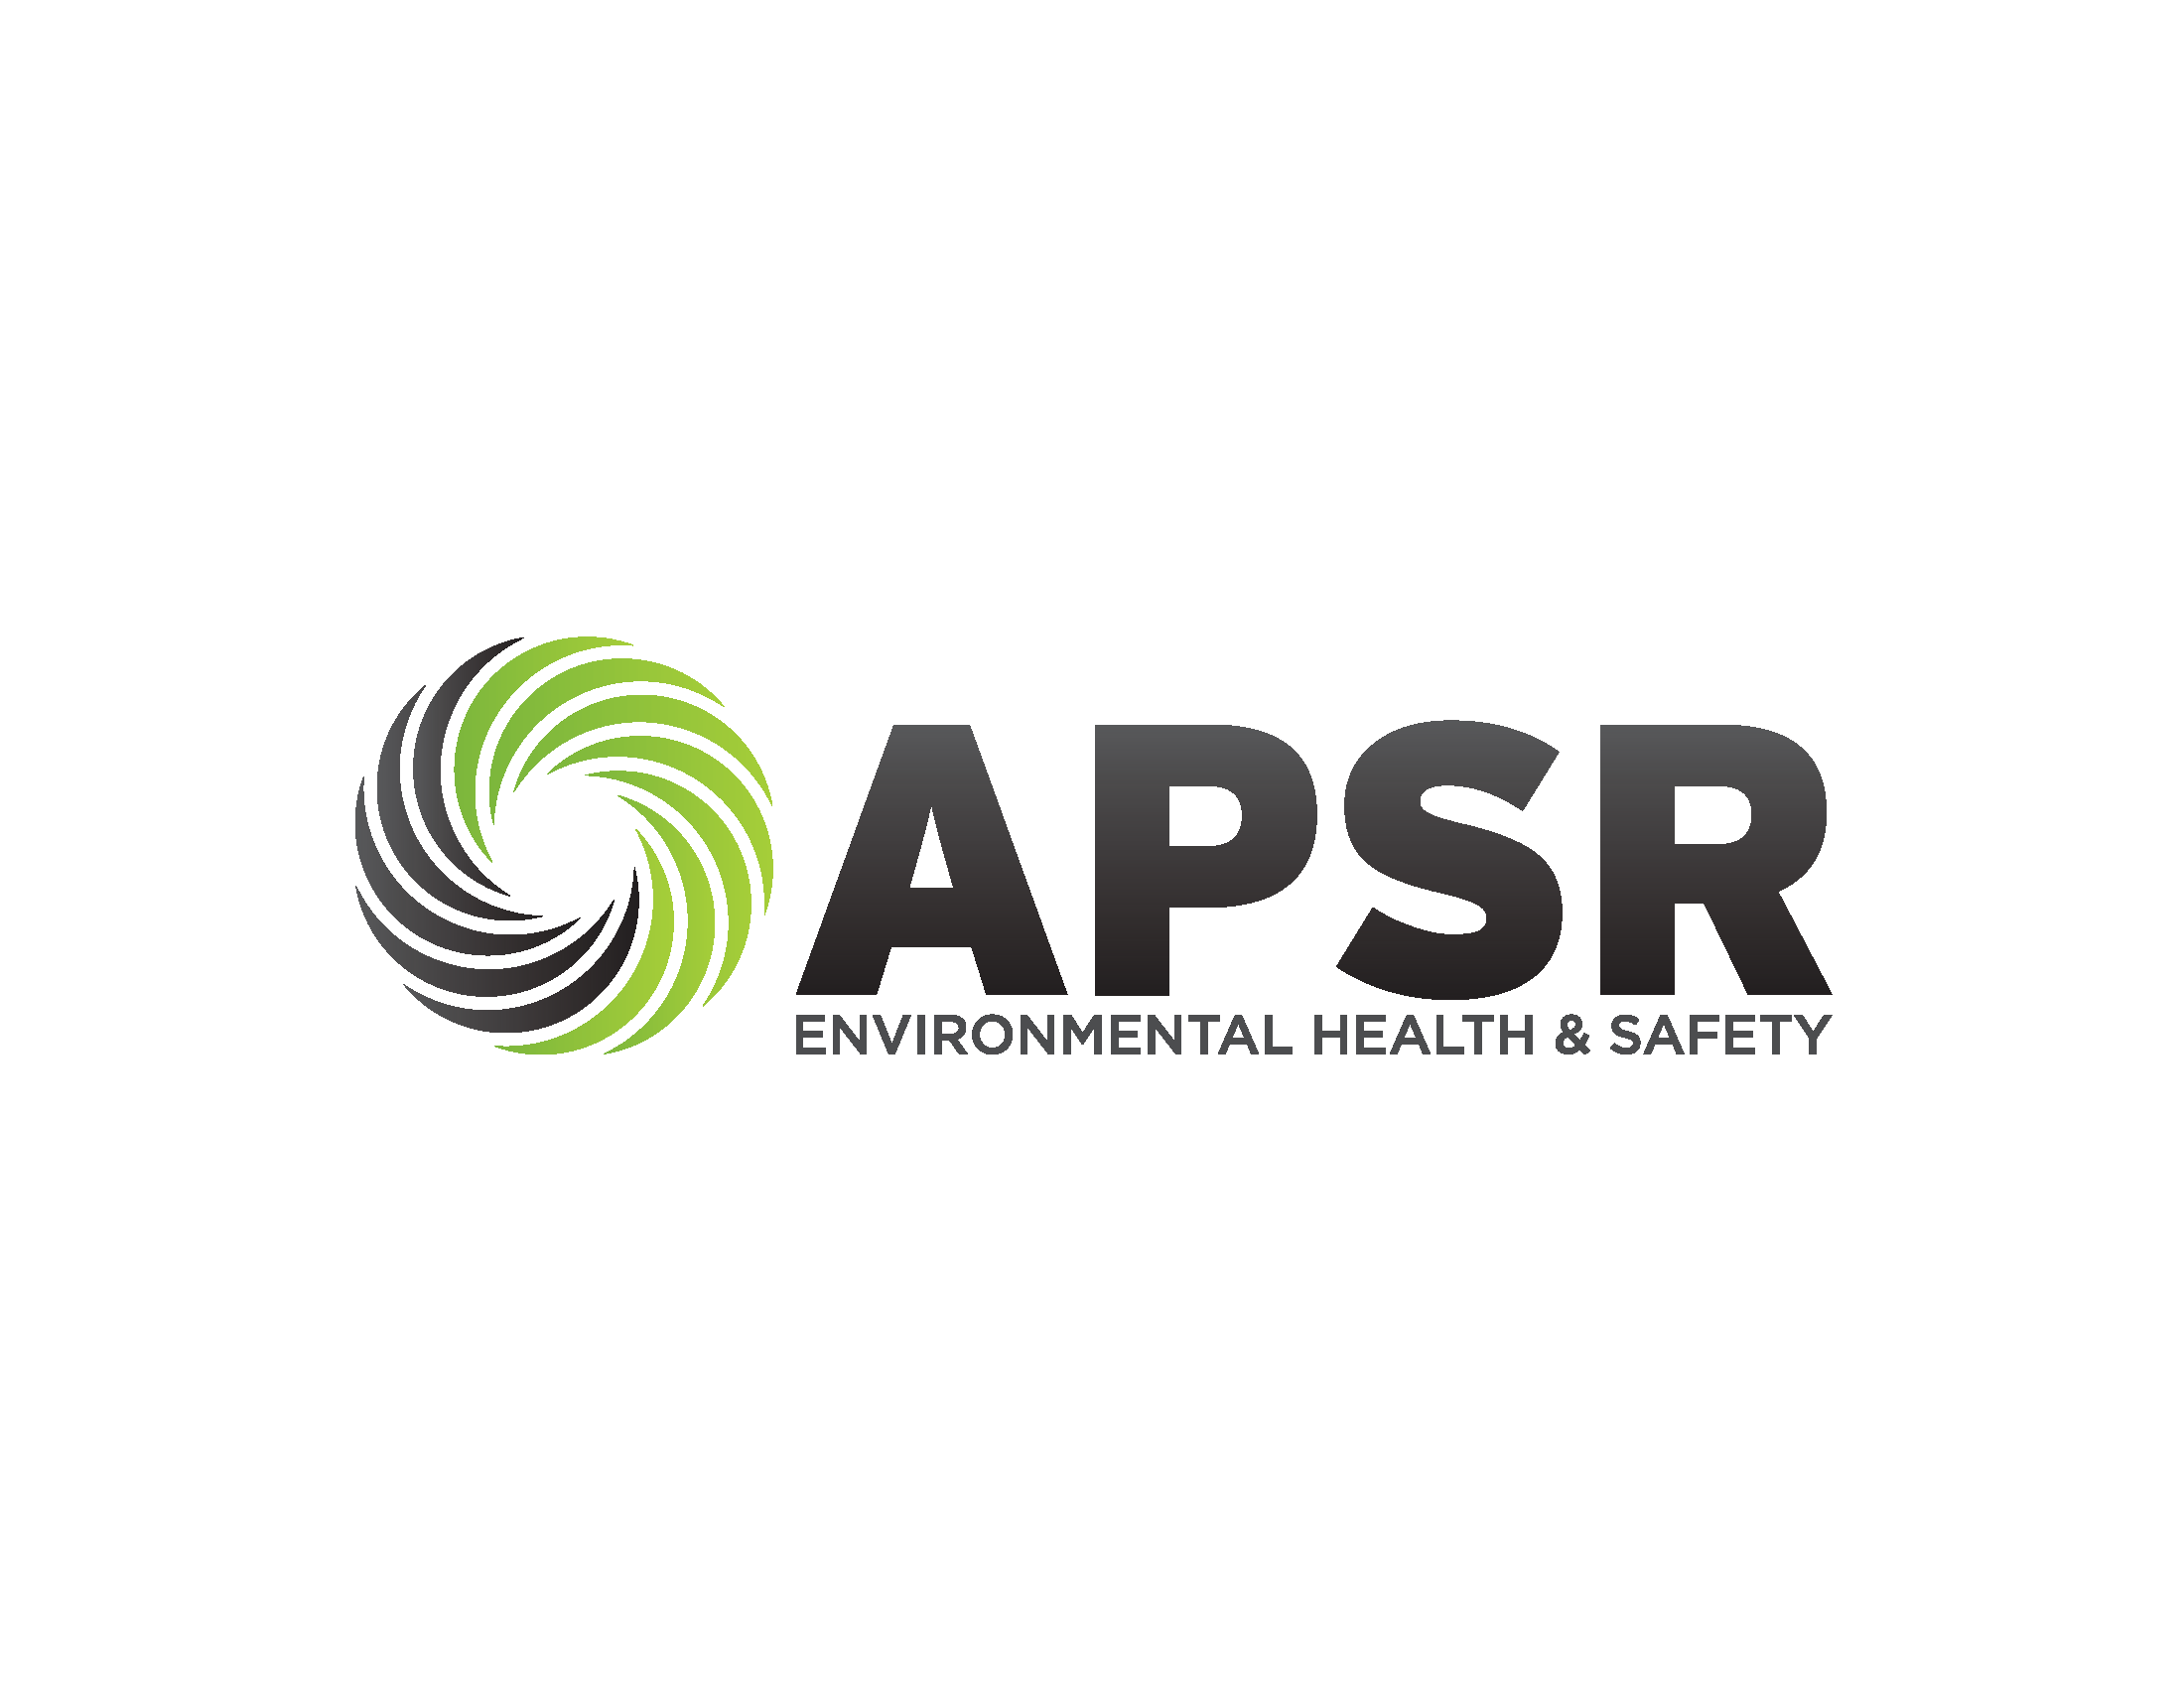 APSR Environmental Health & Safety